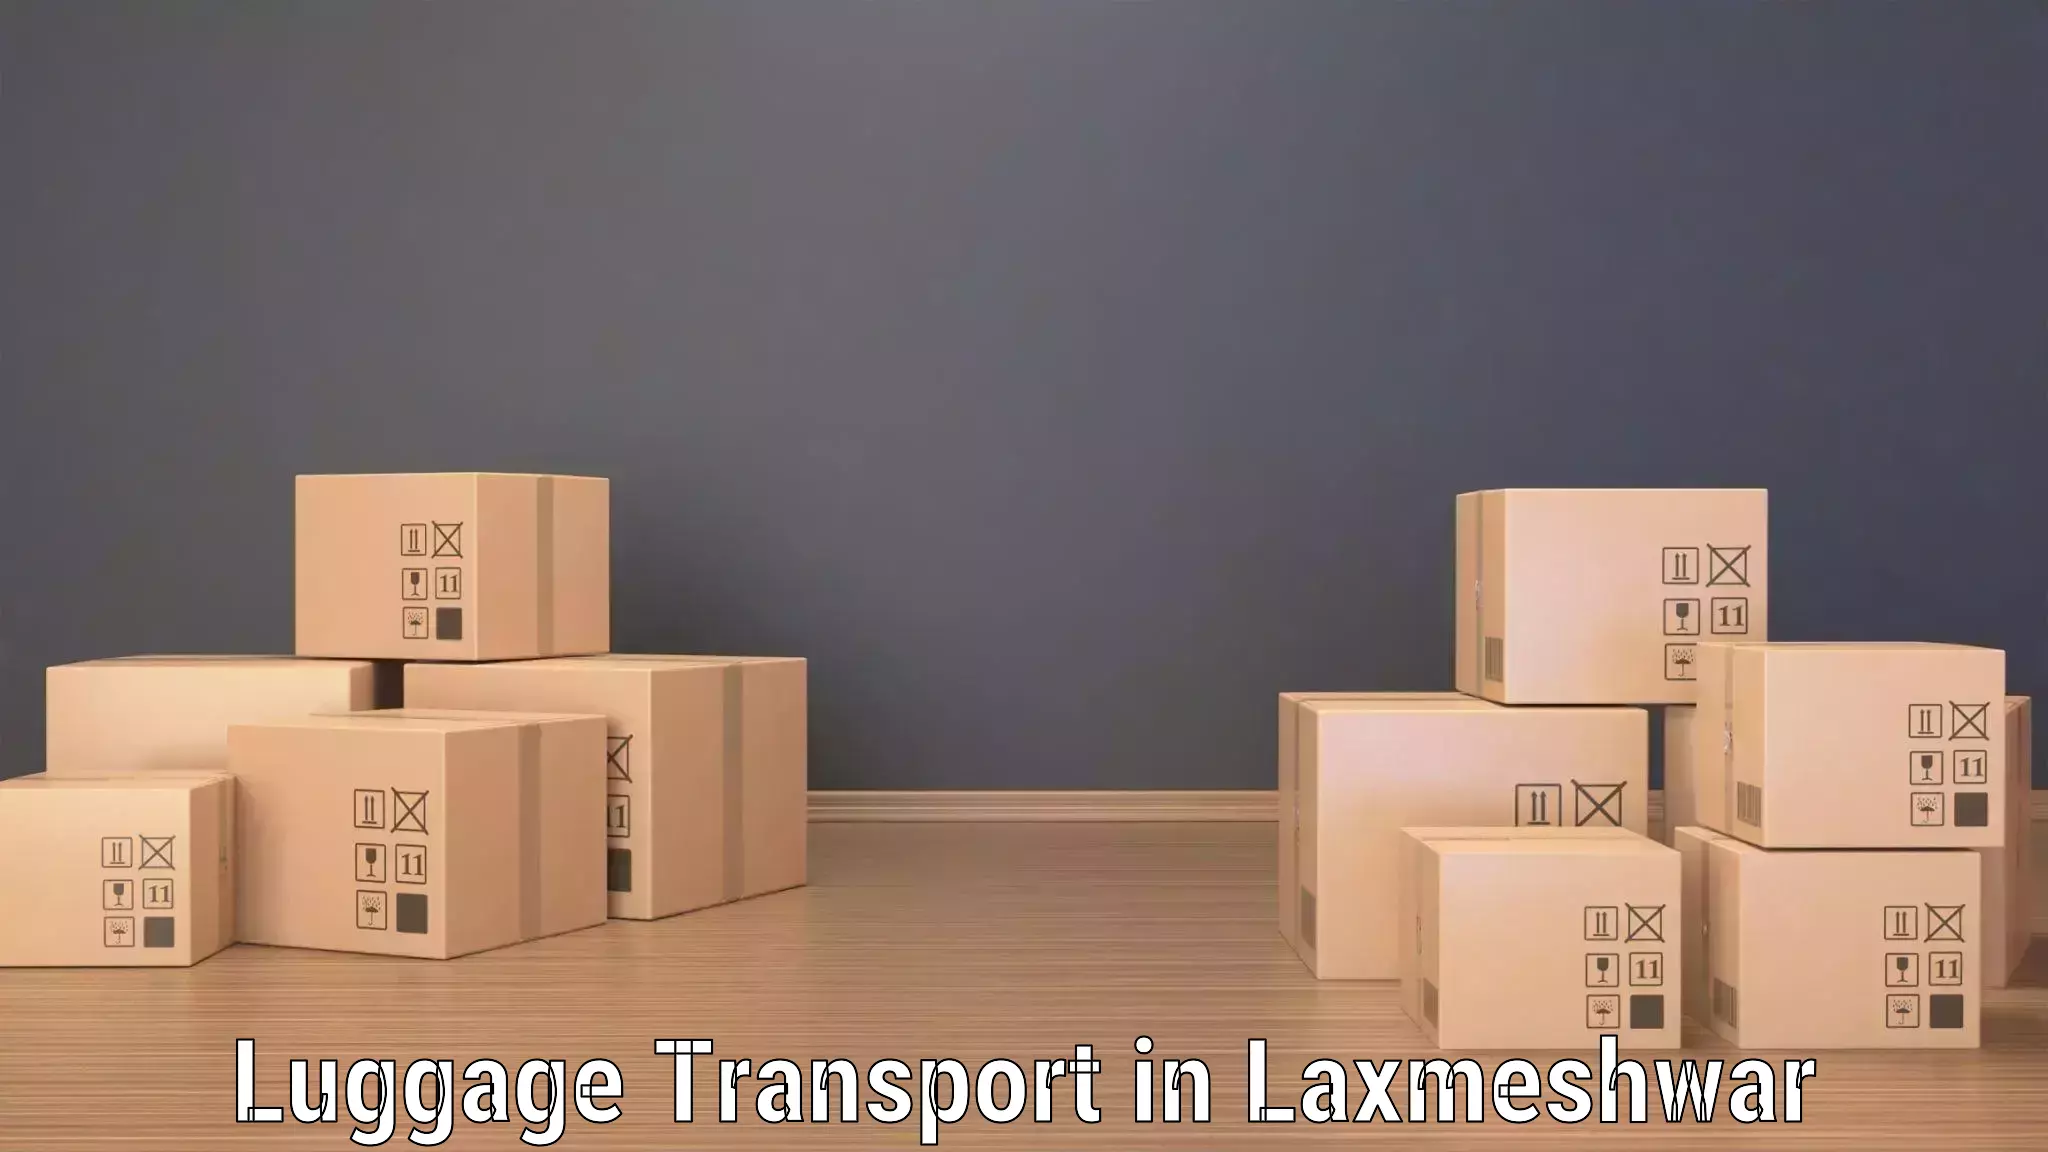 Rural baggage transport in Laxmeshwar